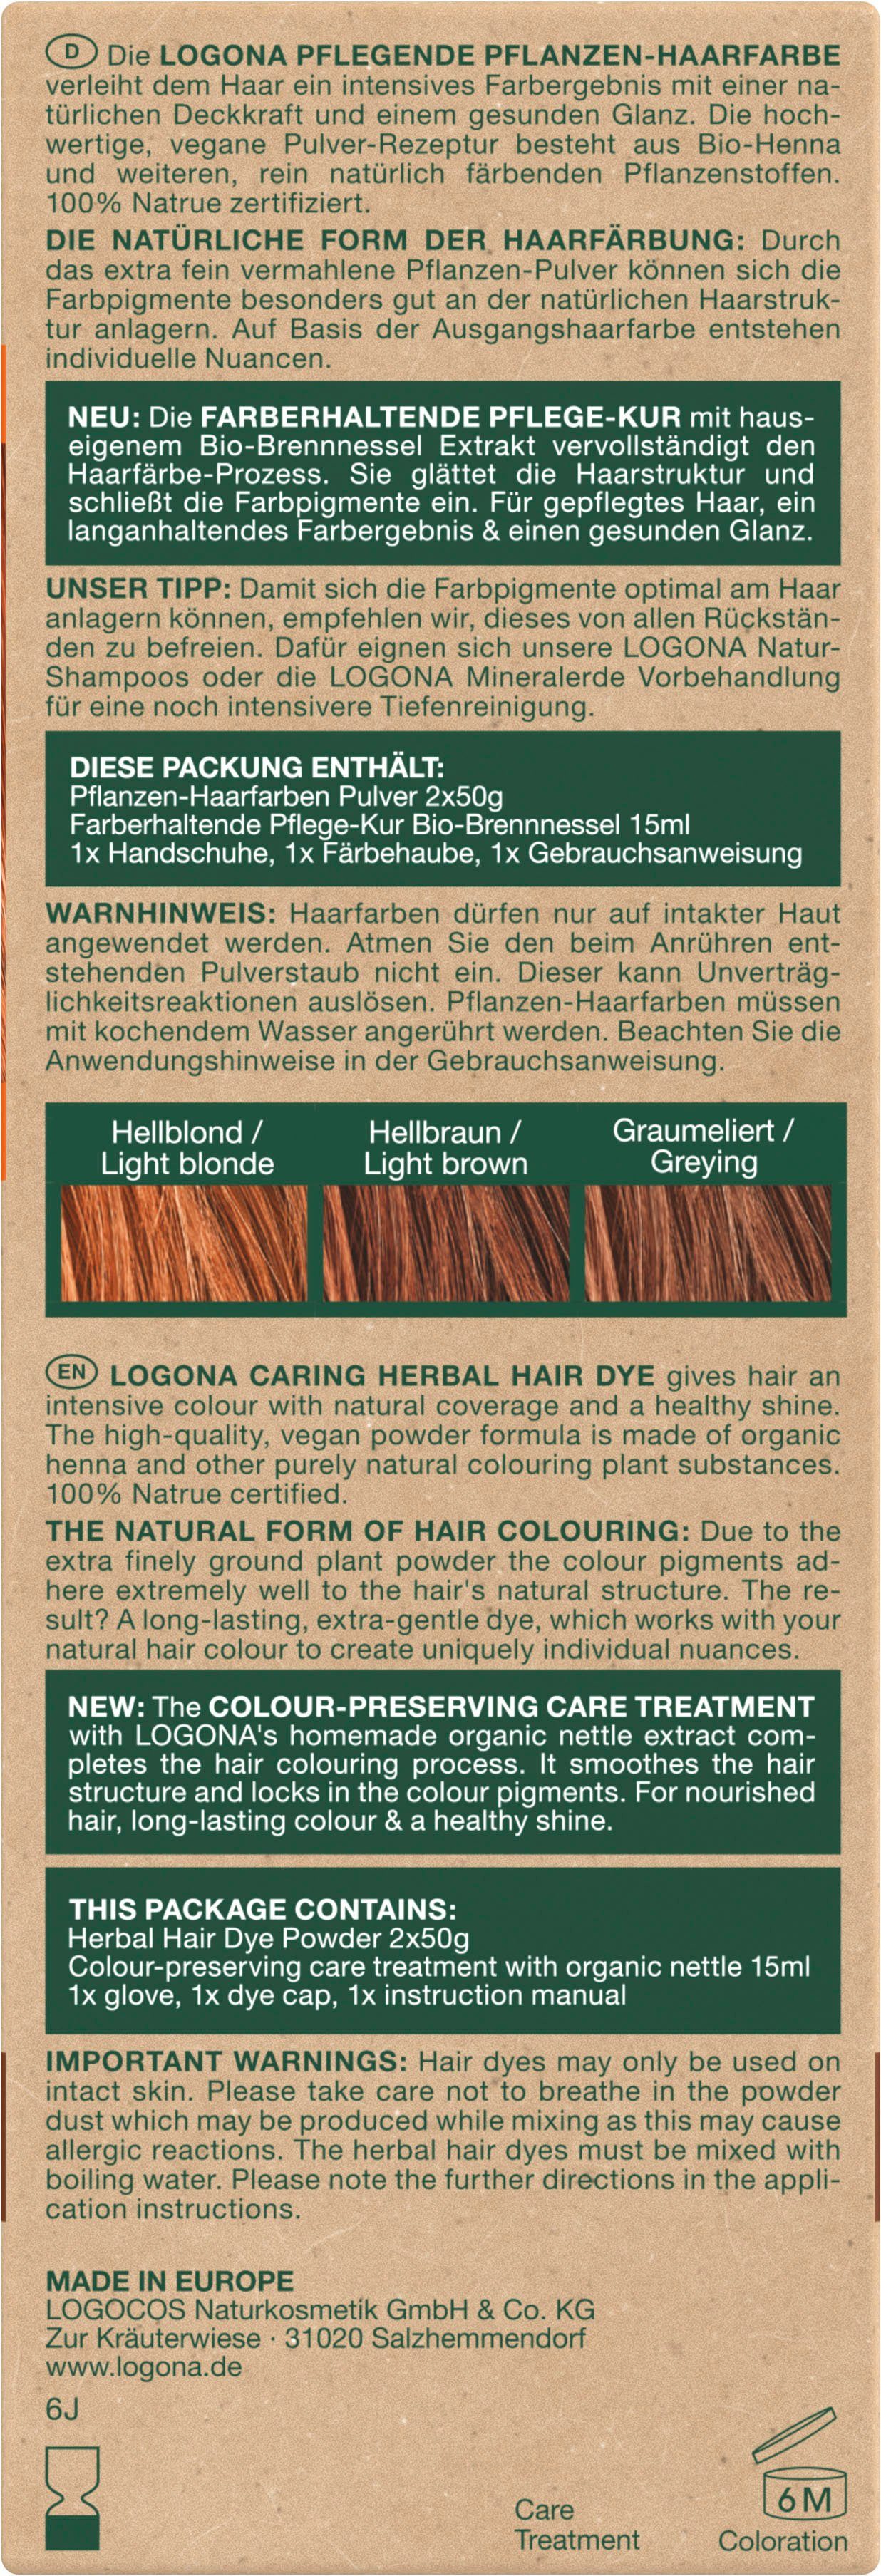 03 Pflanzen-Haarfarbe LOGONA Pulver Flammenrot Haarfarbe